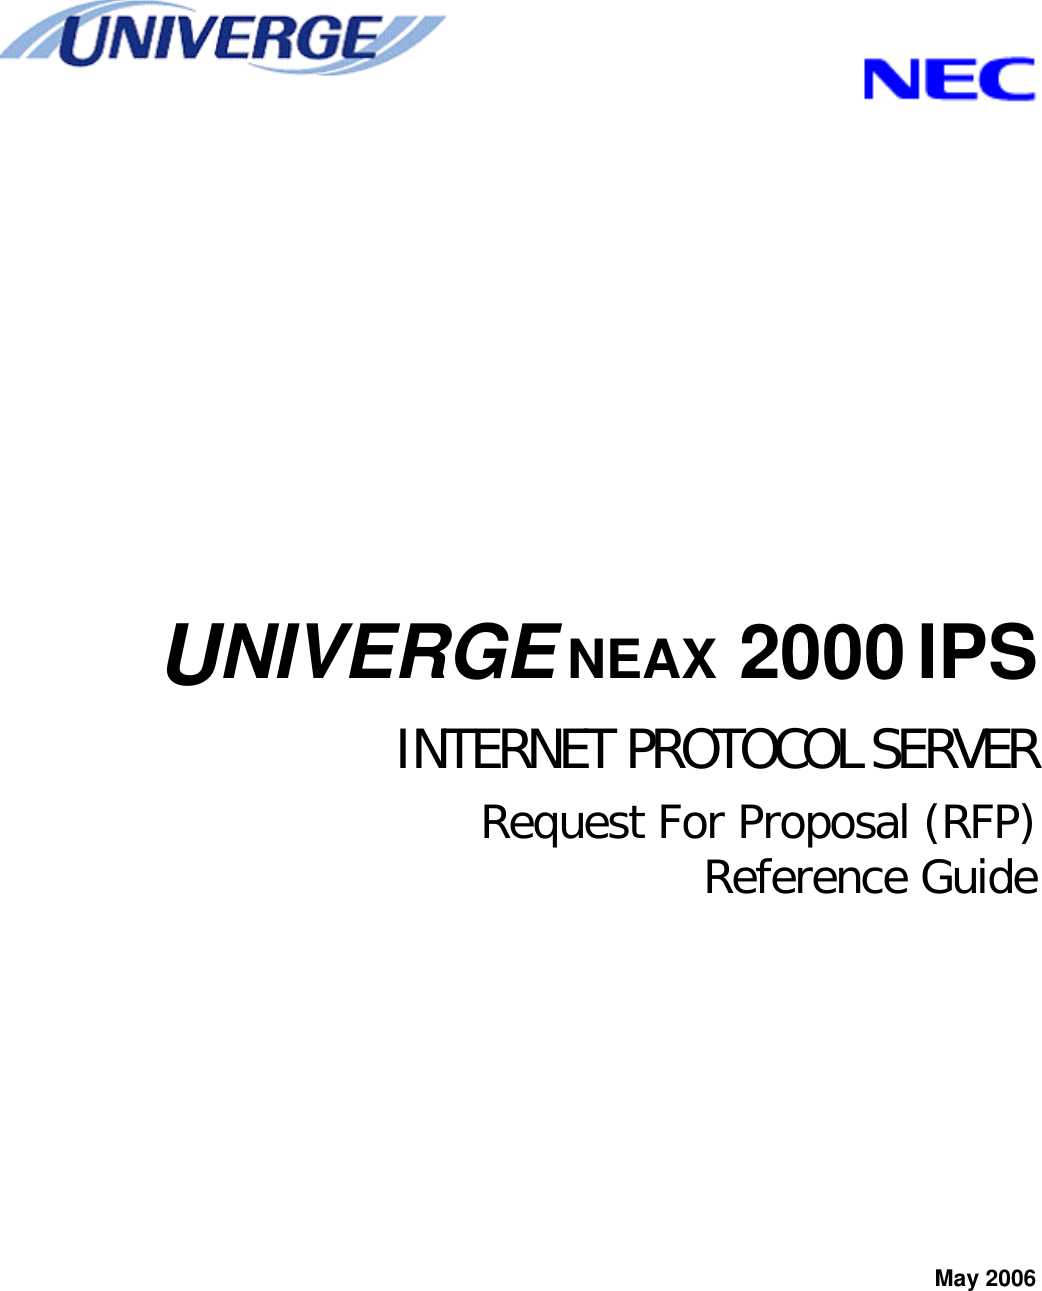 Nec Univerge Neax 2000 Ips Users Manual 2006007rfp